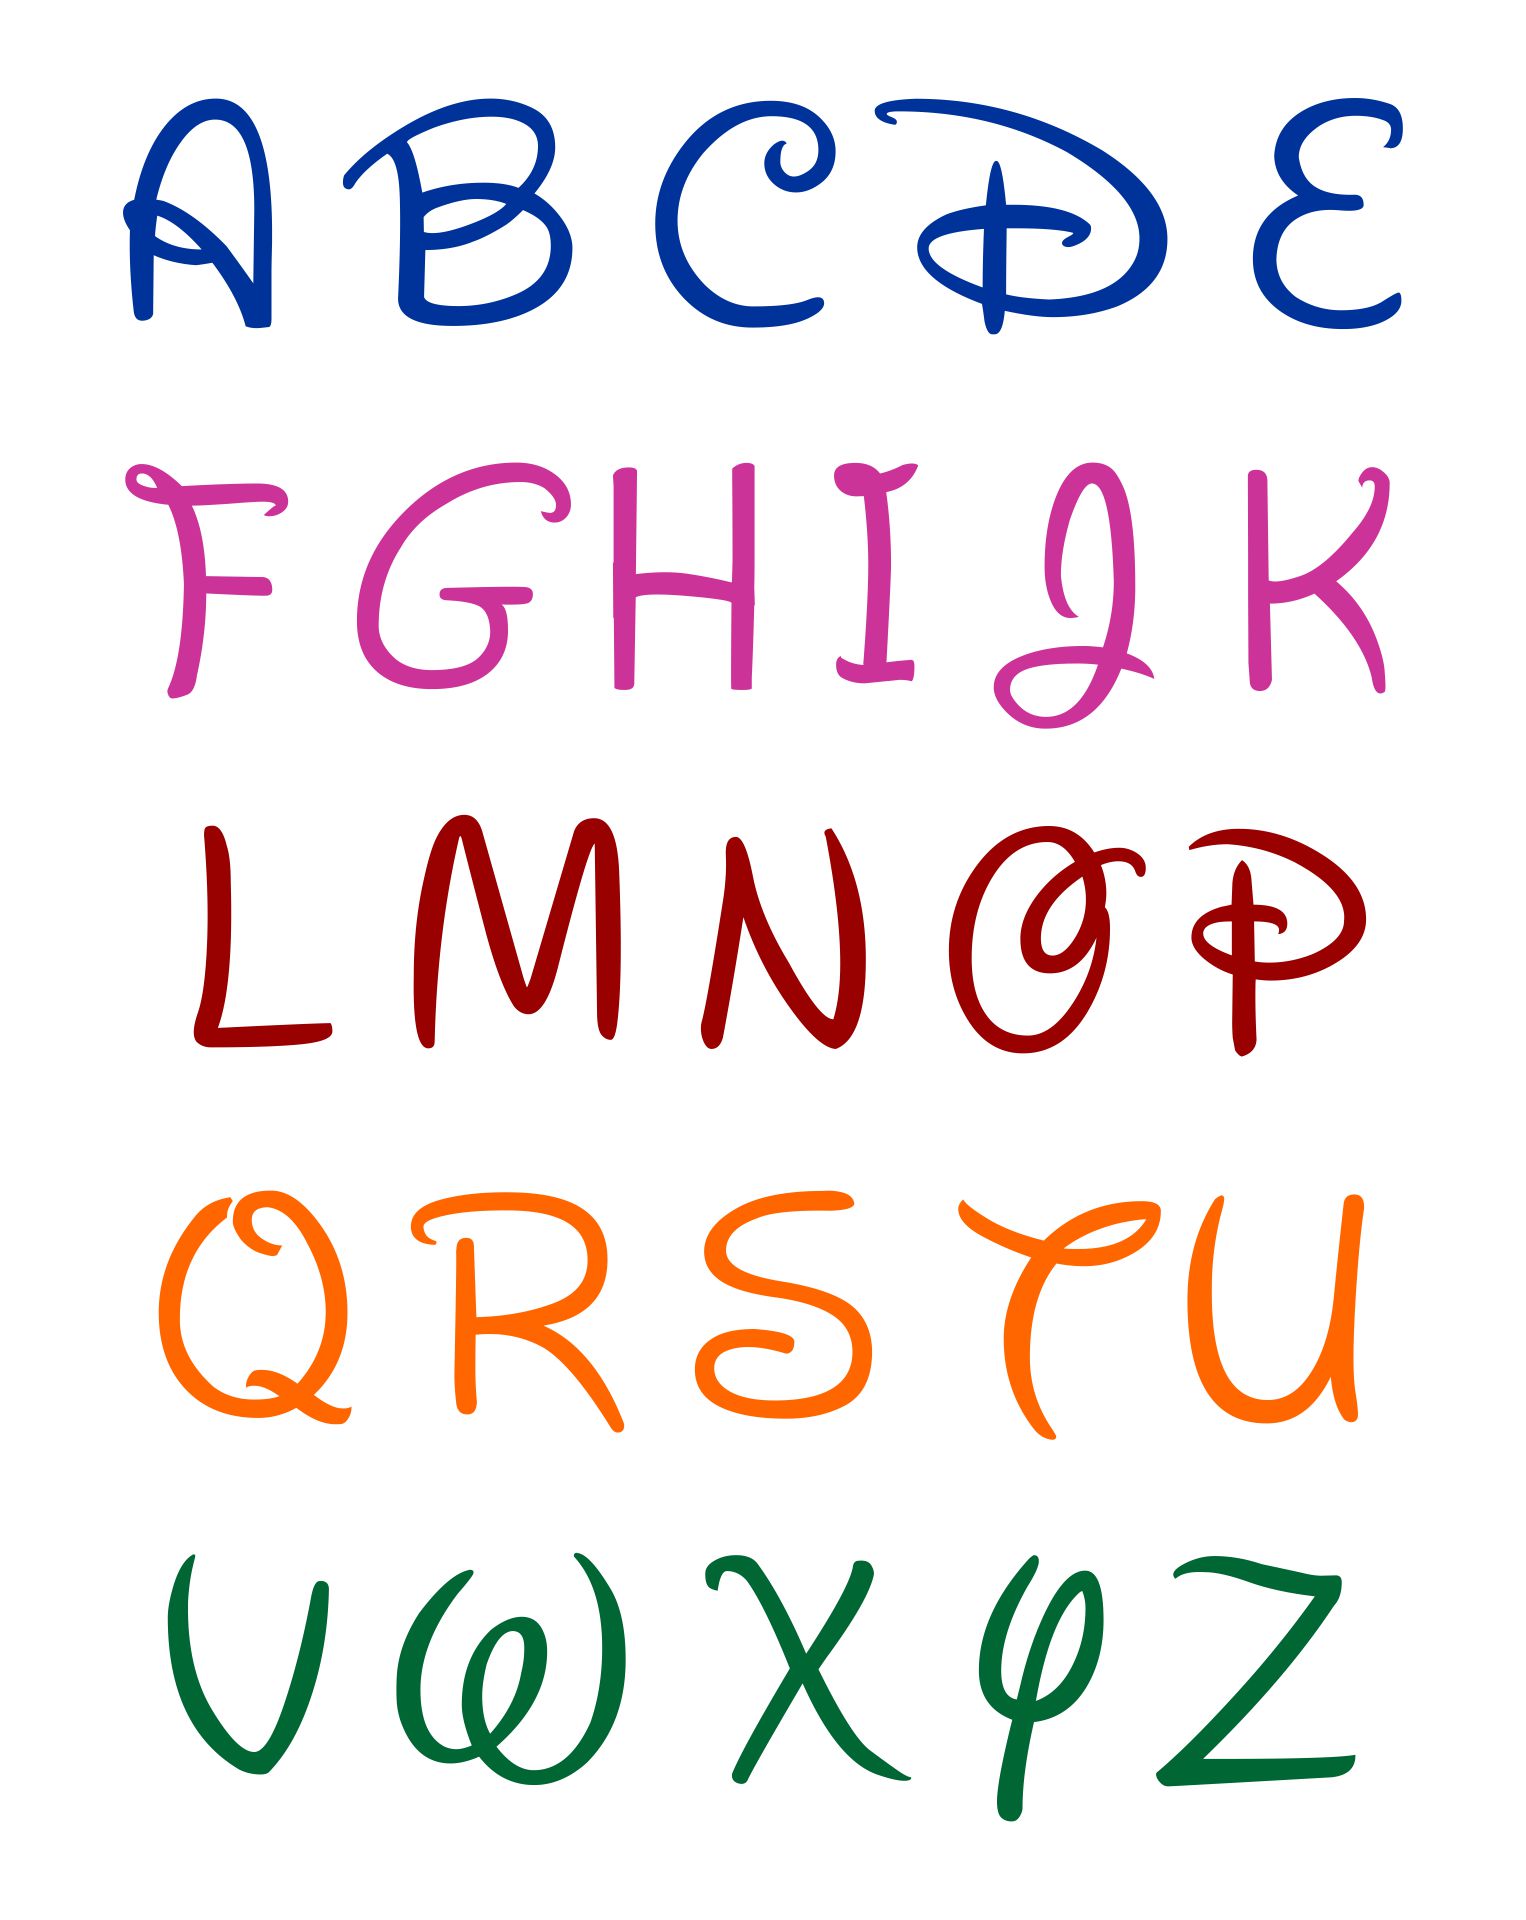 7-best-images-of-alphabet-disney-font-printables-disney-font-alphabet-letter-printables-walt